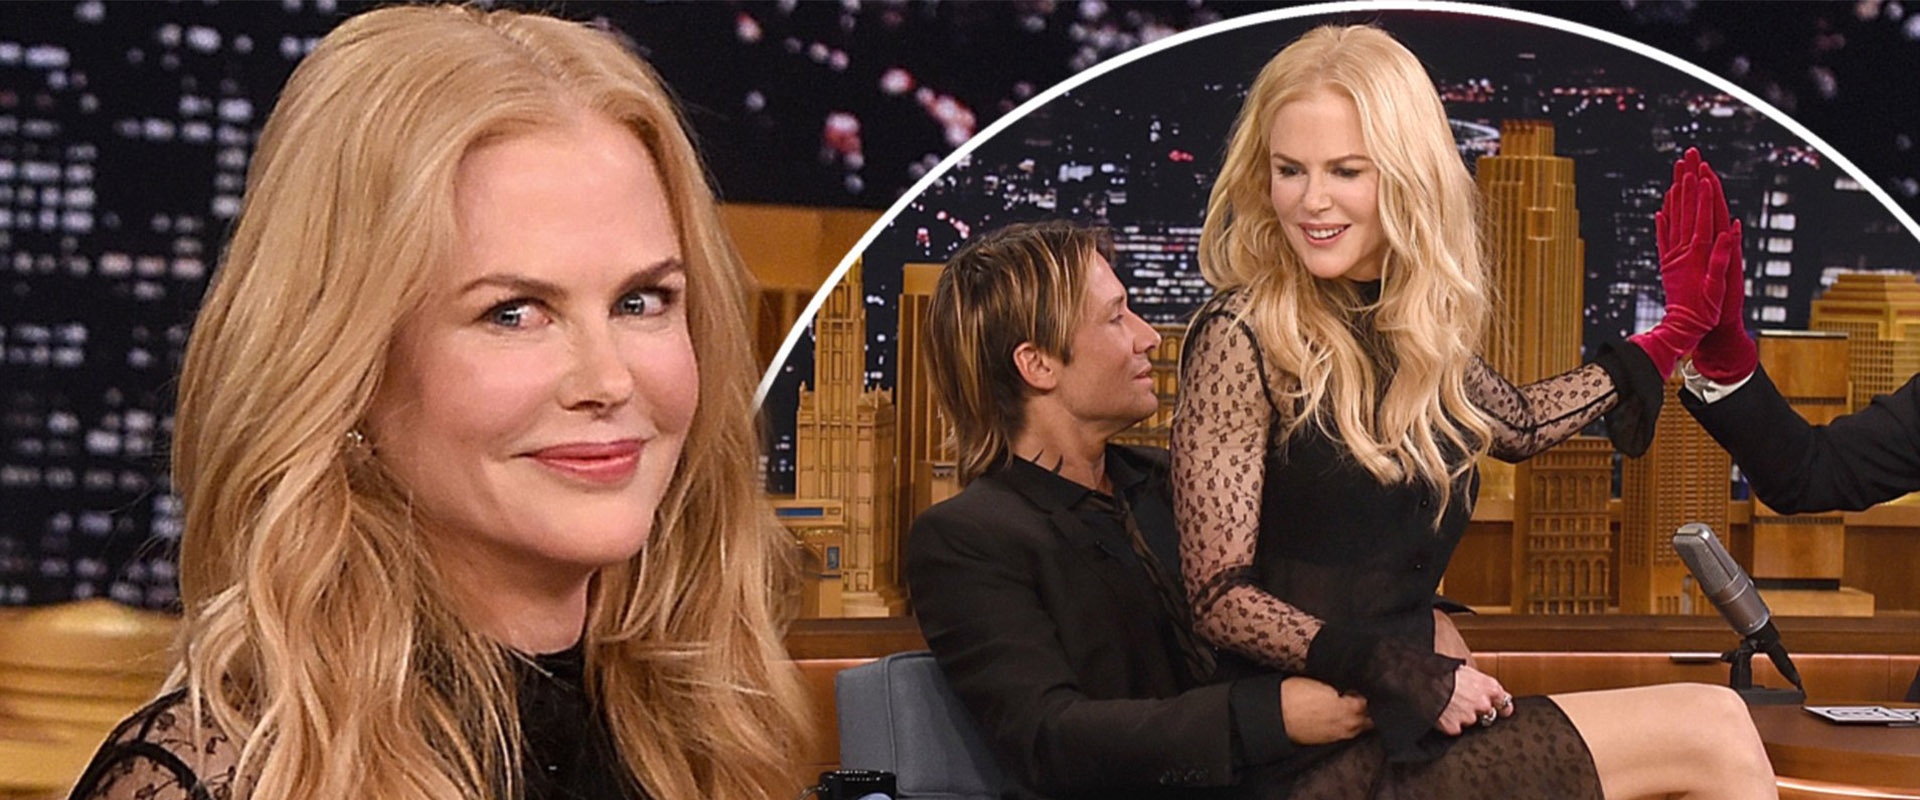 Did Jimmy Almost Date Nicole Kidman? - Tonight Show Stories